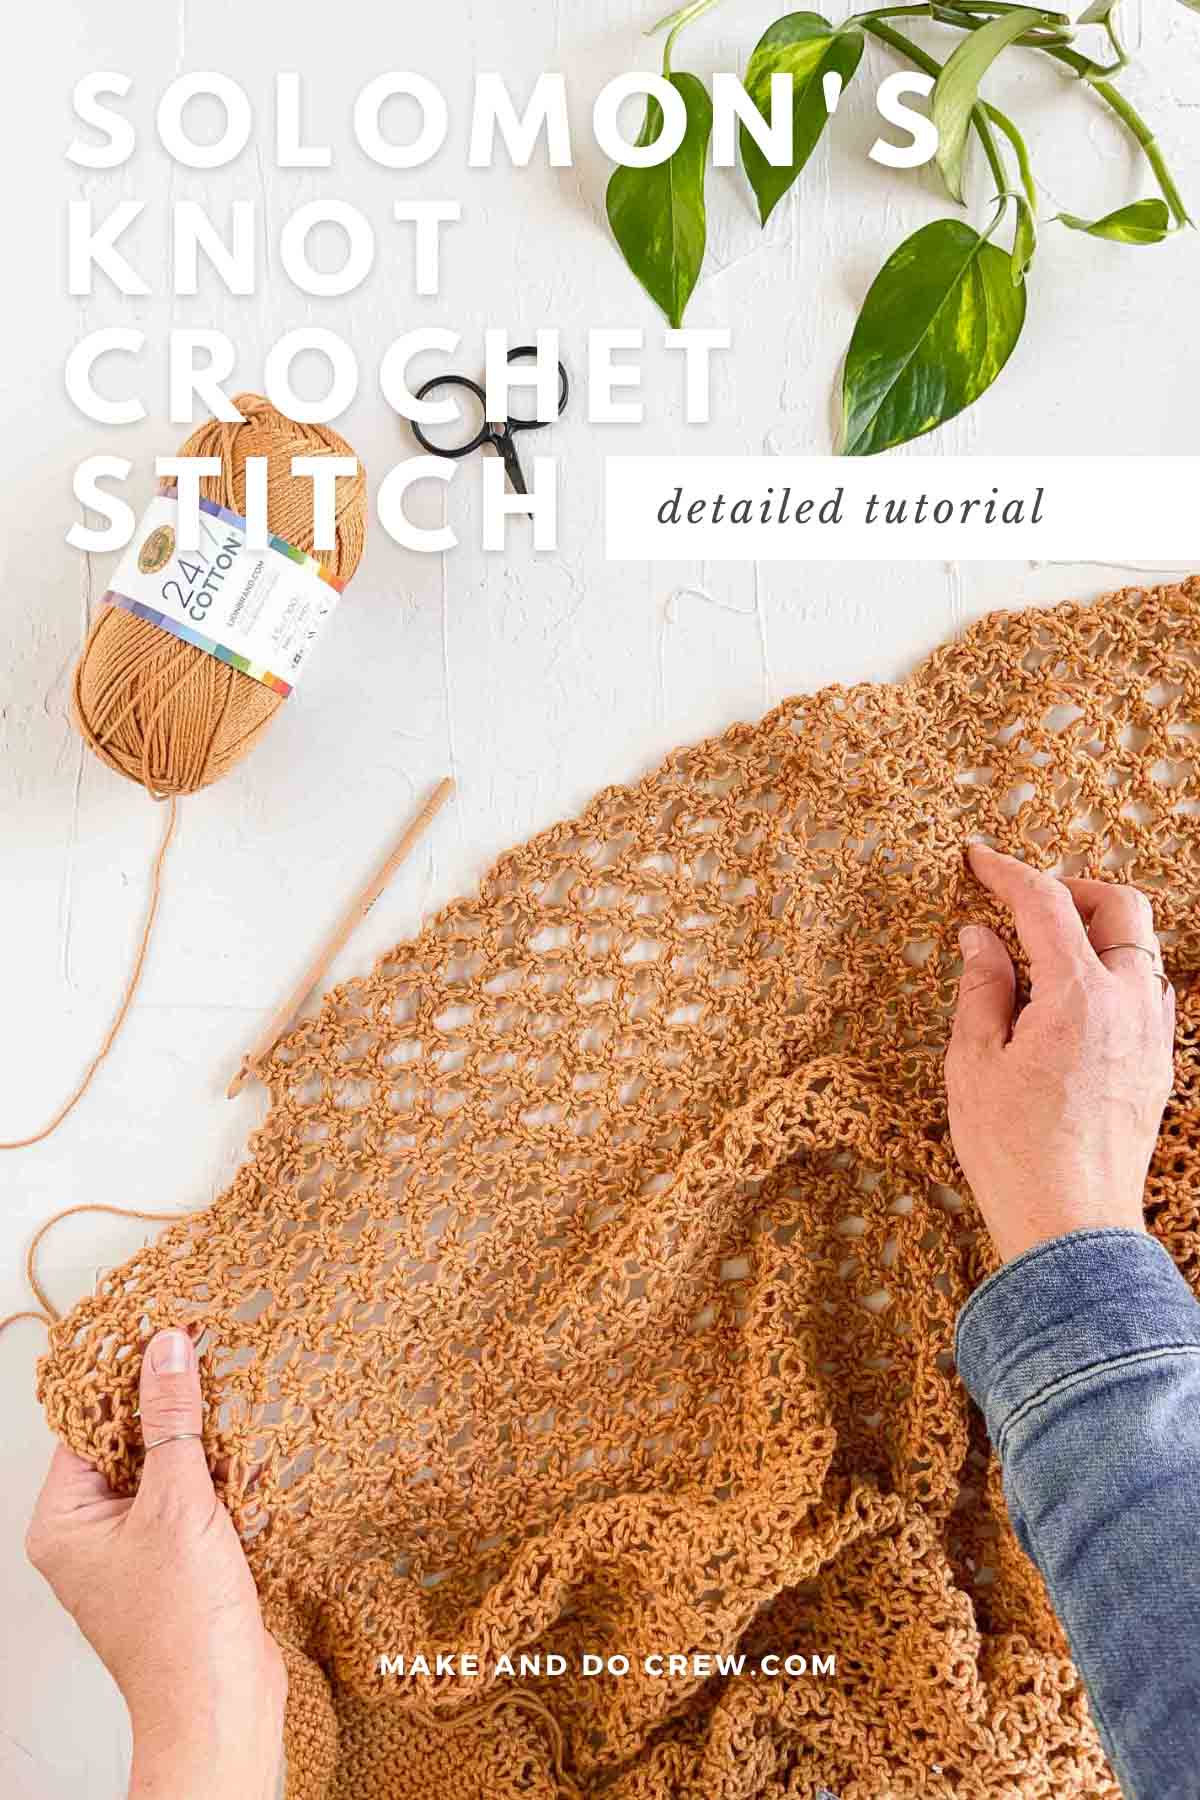 A woman's hand holding an in-progress crochet pattern using Solomon's knot stitch.
